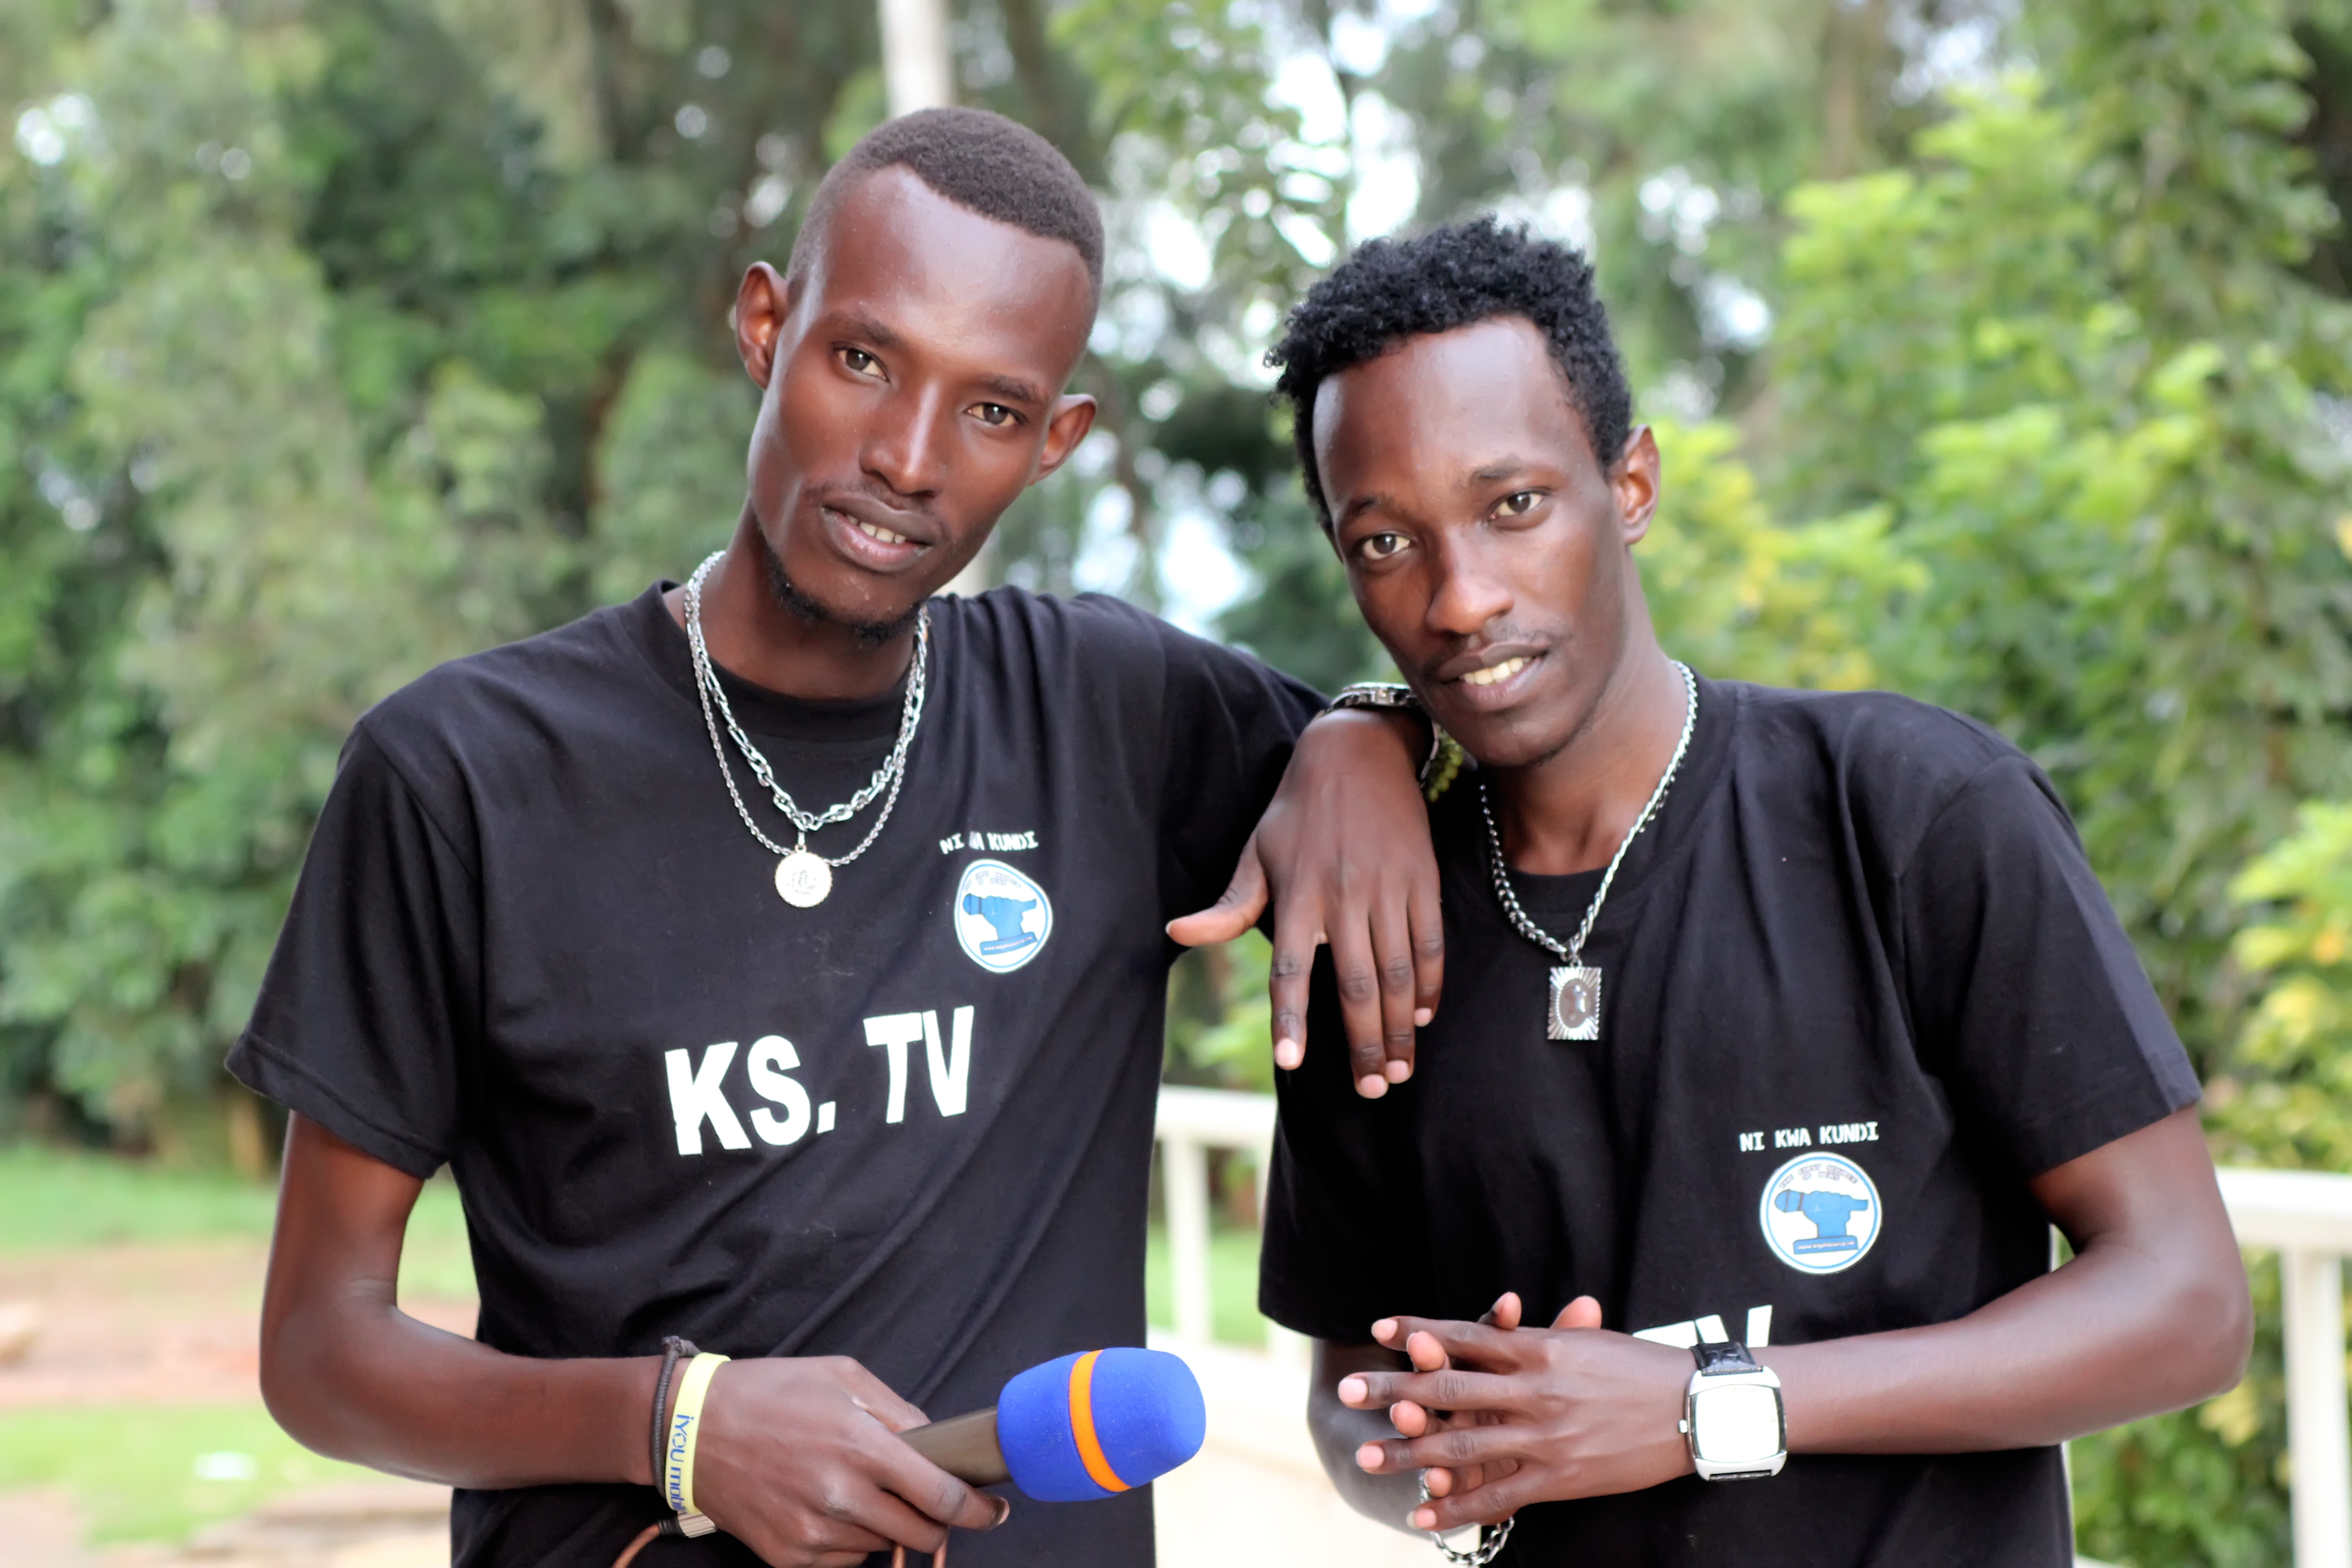 Kigalisource Media Group